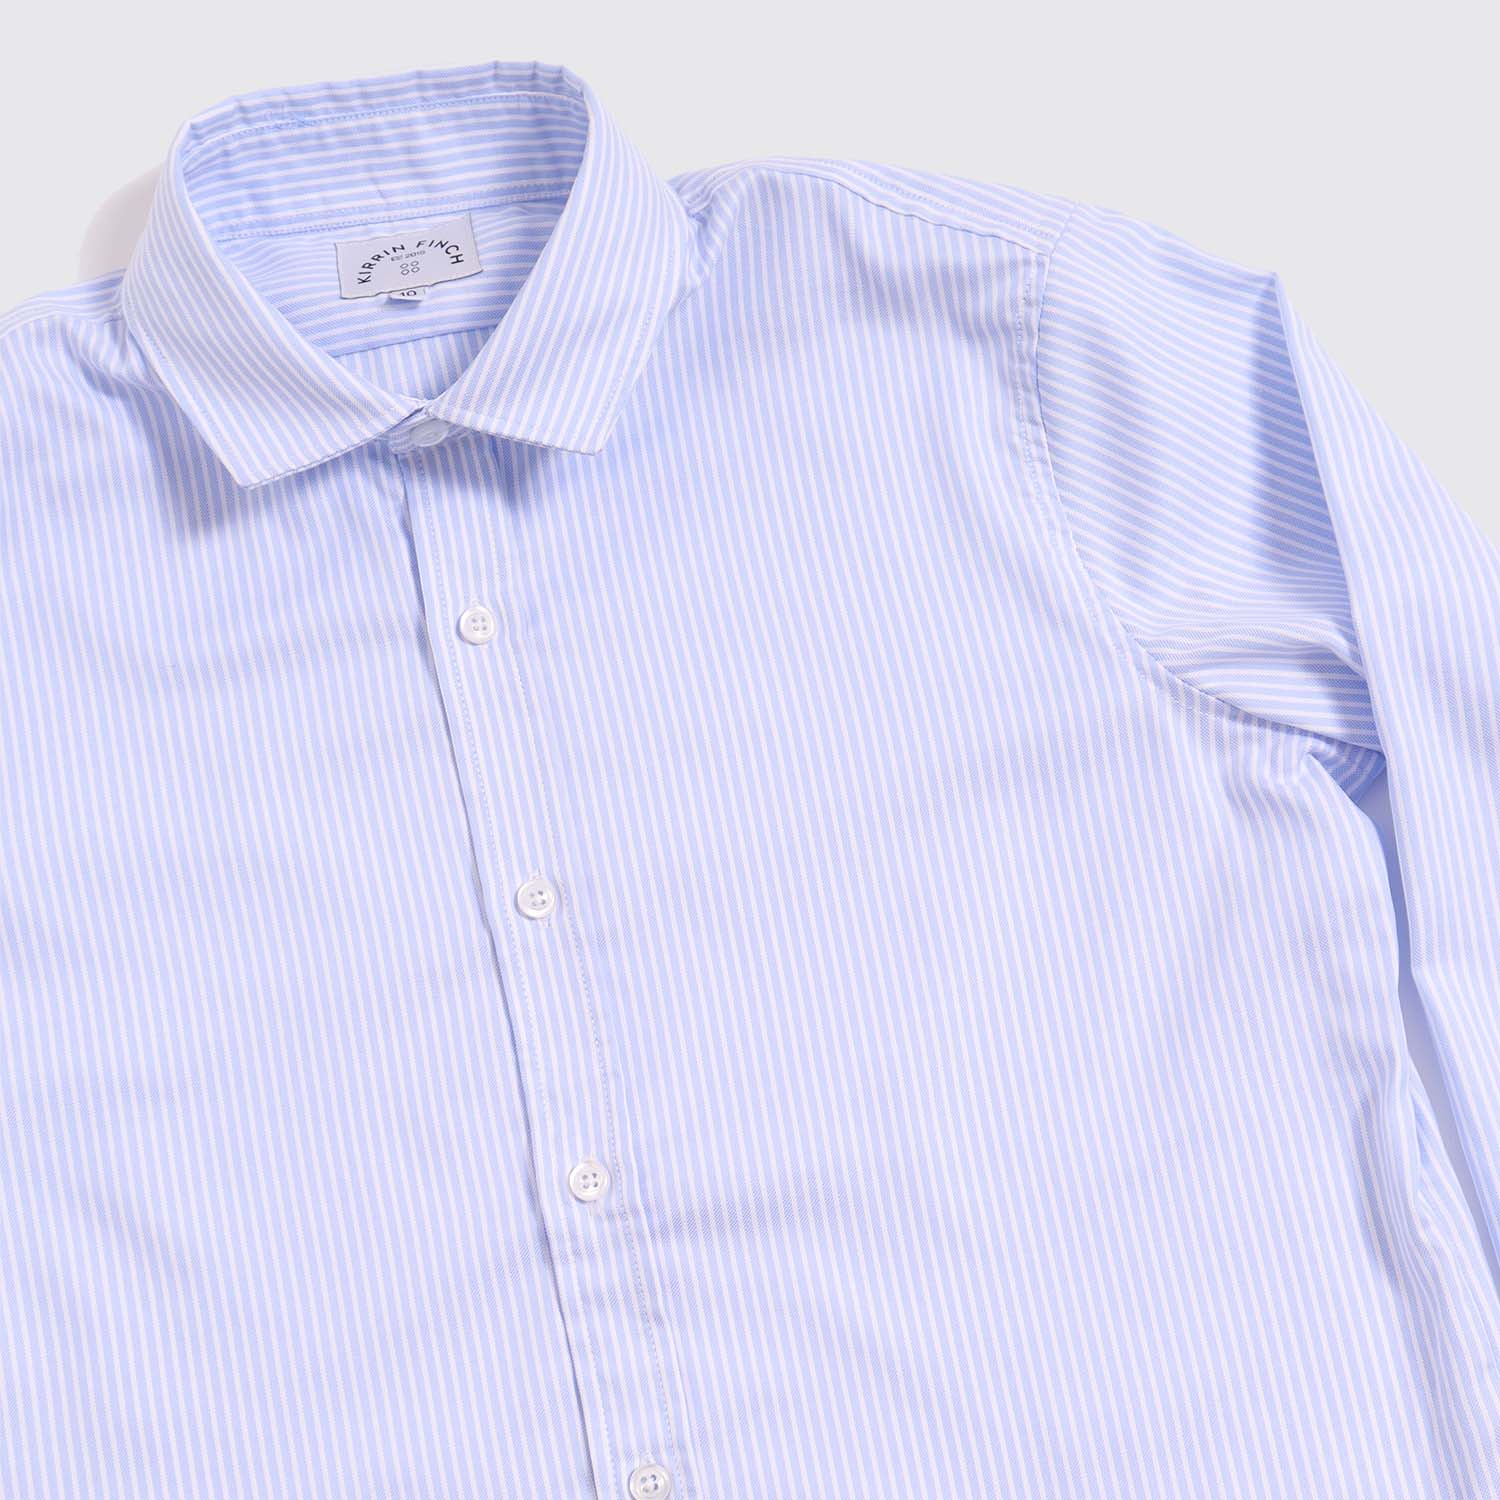 A light blue striped white dress shirt 3/4 shot on a neutral background